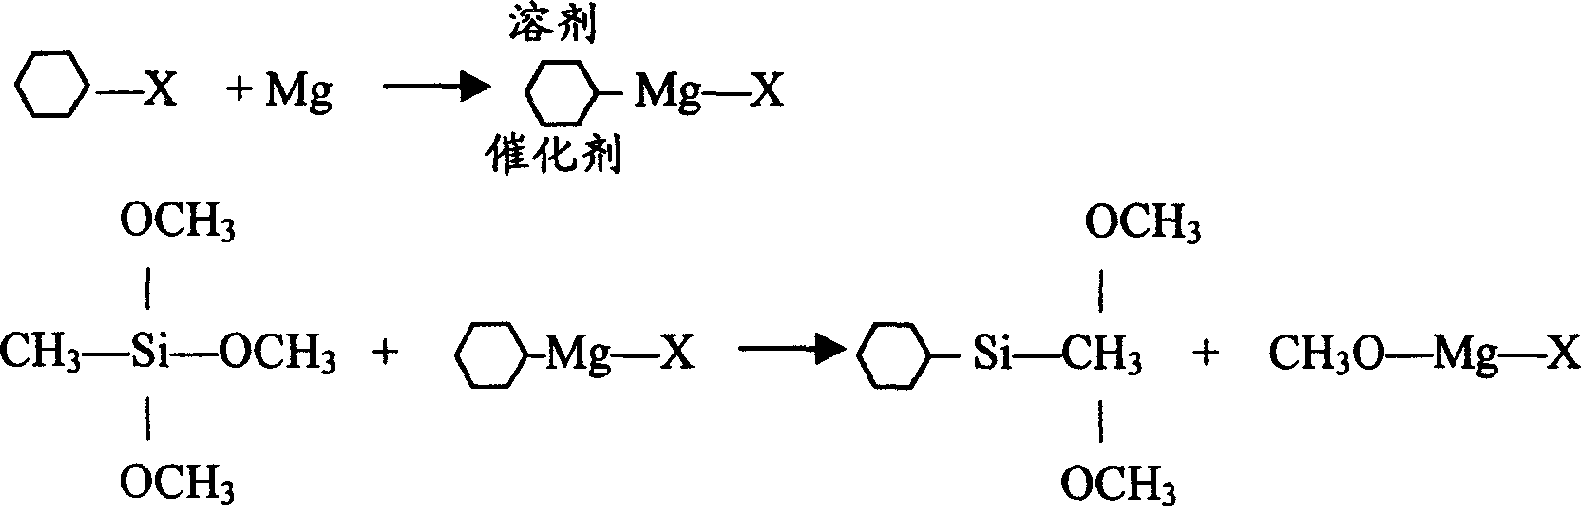 One-step synthesizing cyclohexyl methyl dimethoxy silane without solvent